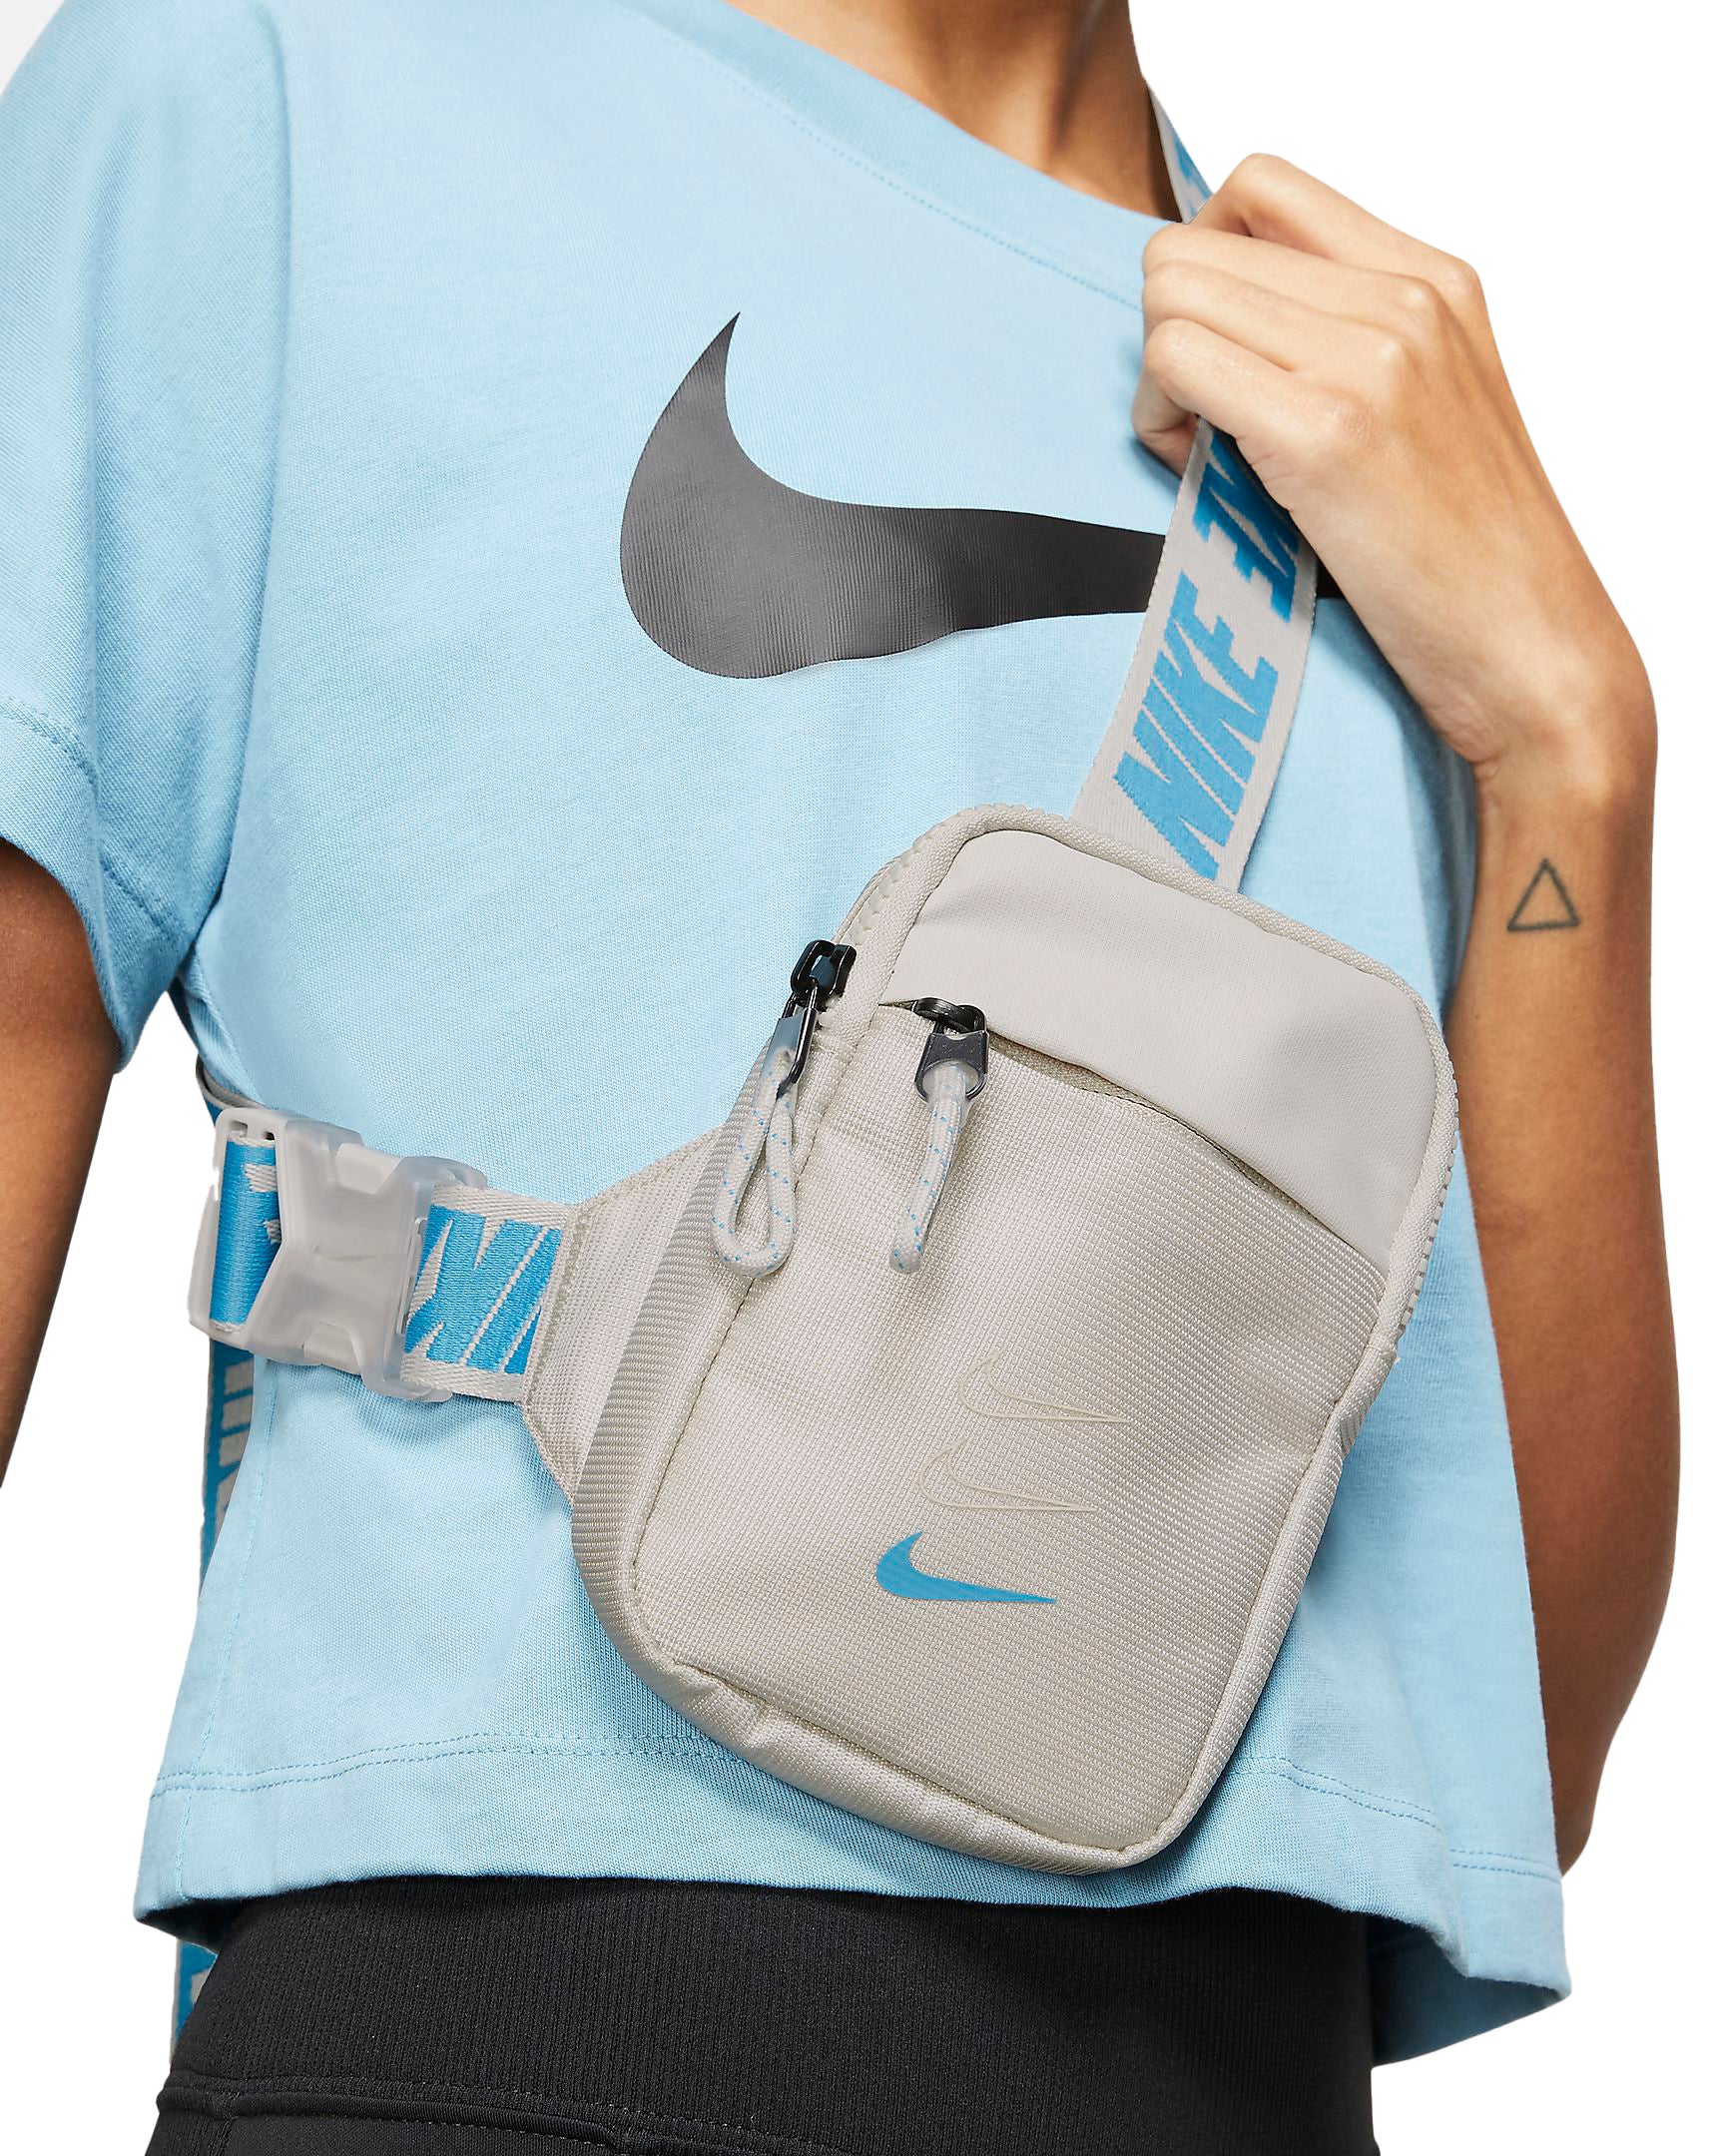 Nike Sportswear Essentials Hip Pack 'Light Bone/Laser Blue'